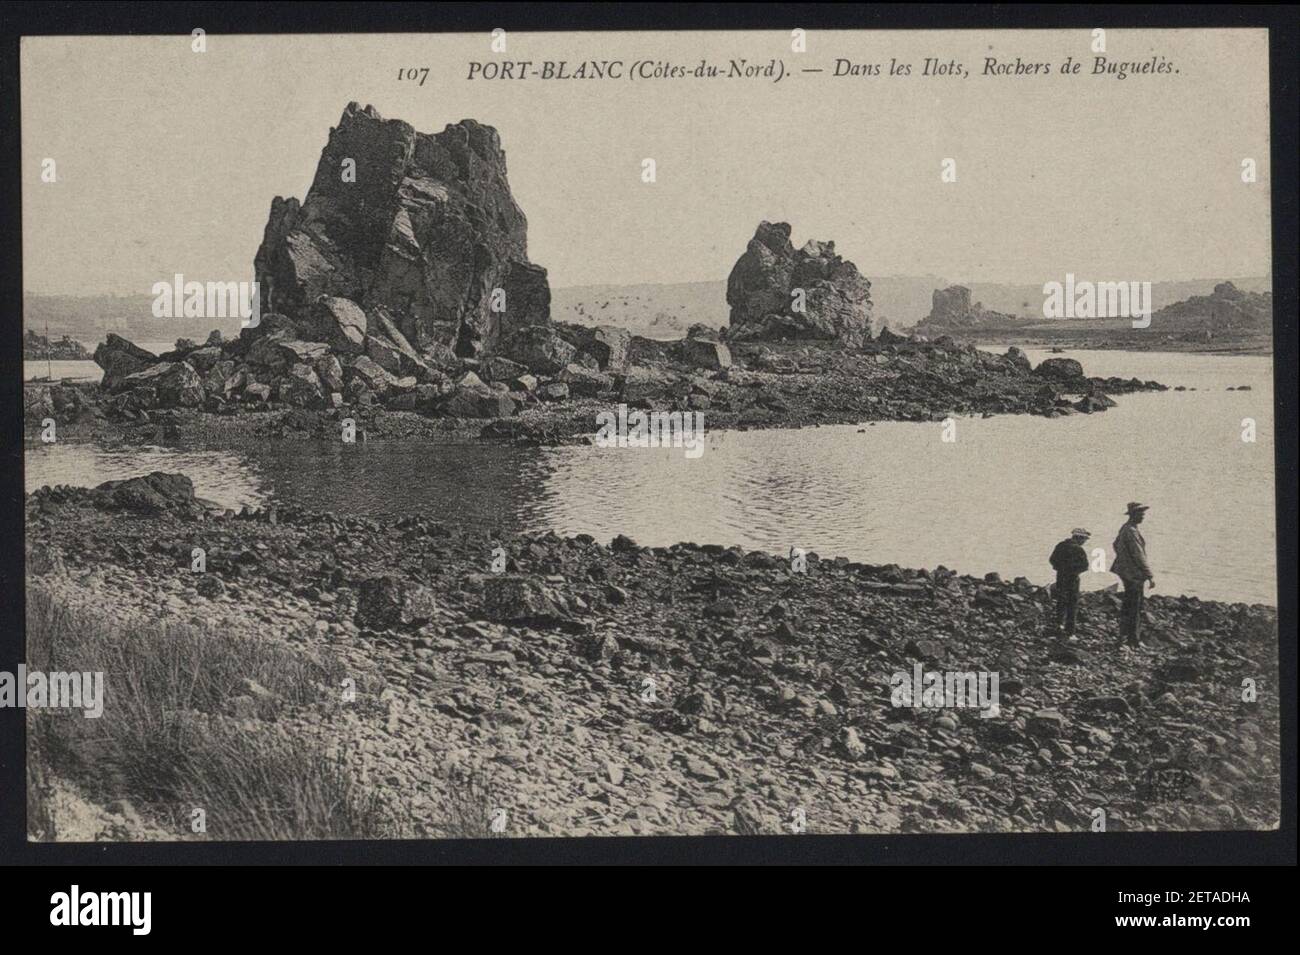 Penvénan - Dans les Ilots, rochers de Buguélès - AD22 - 16FI2799. Stockfoto